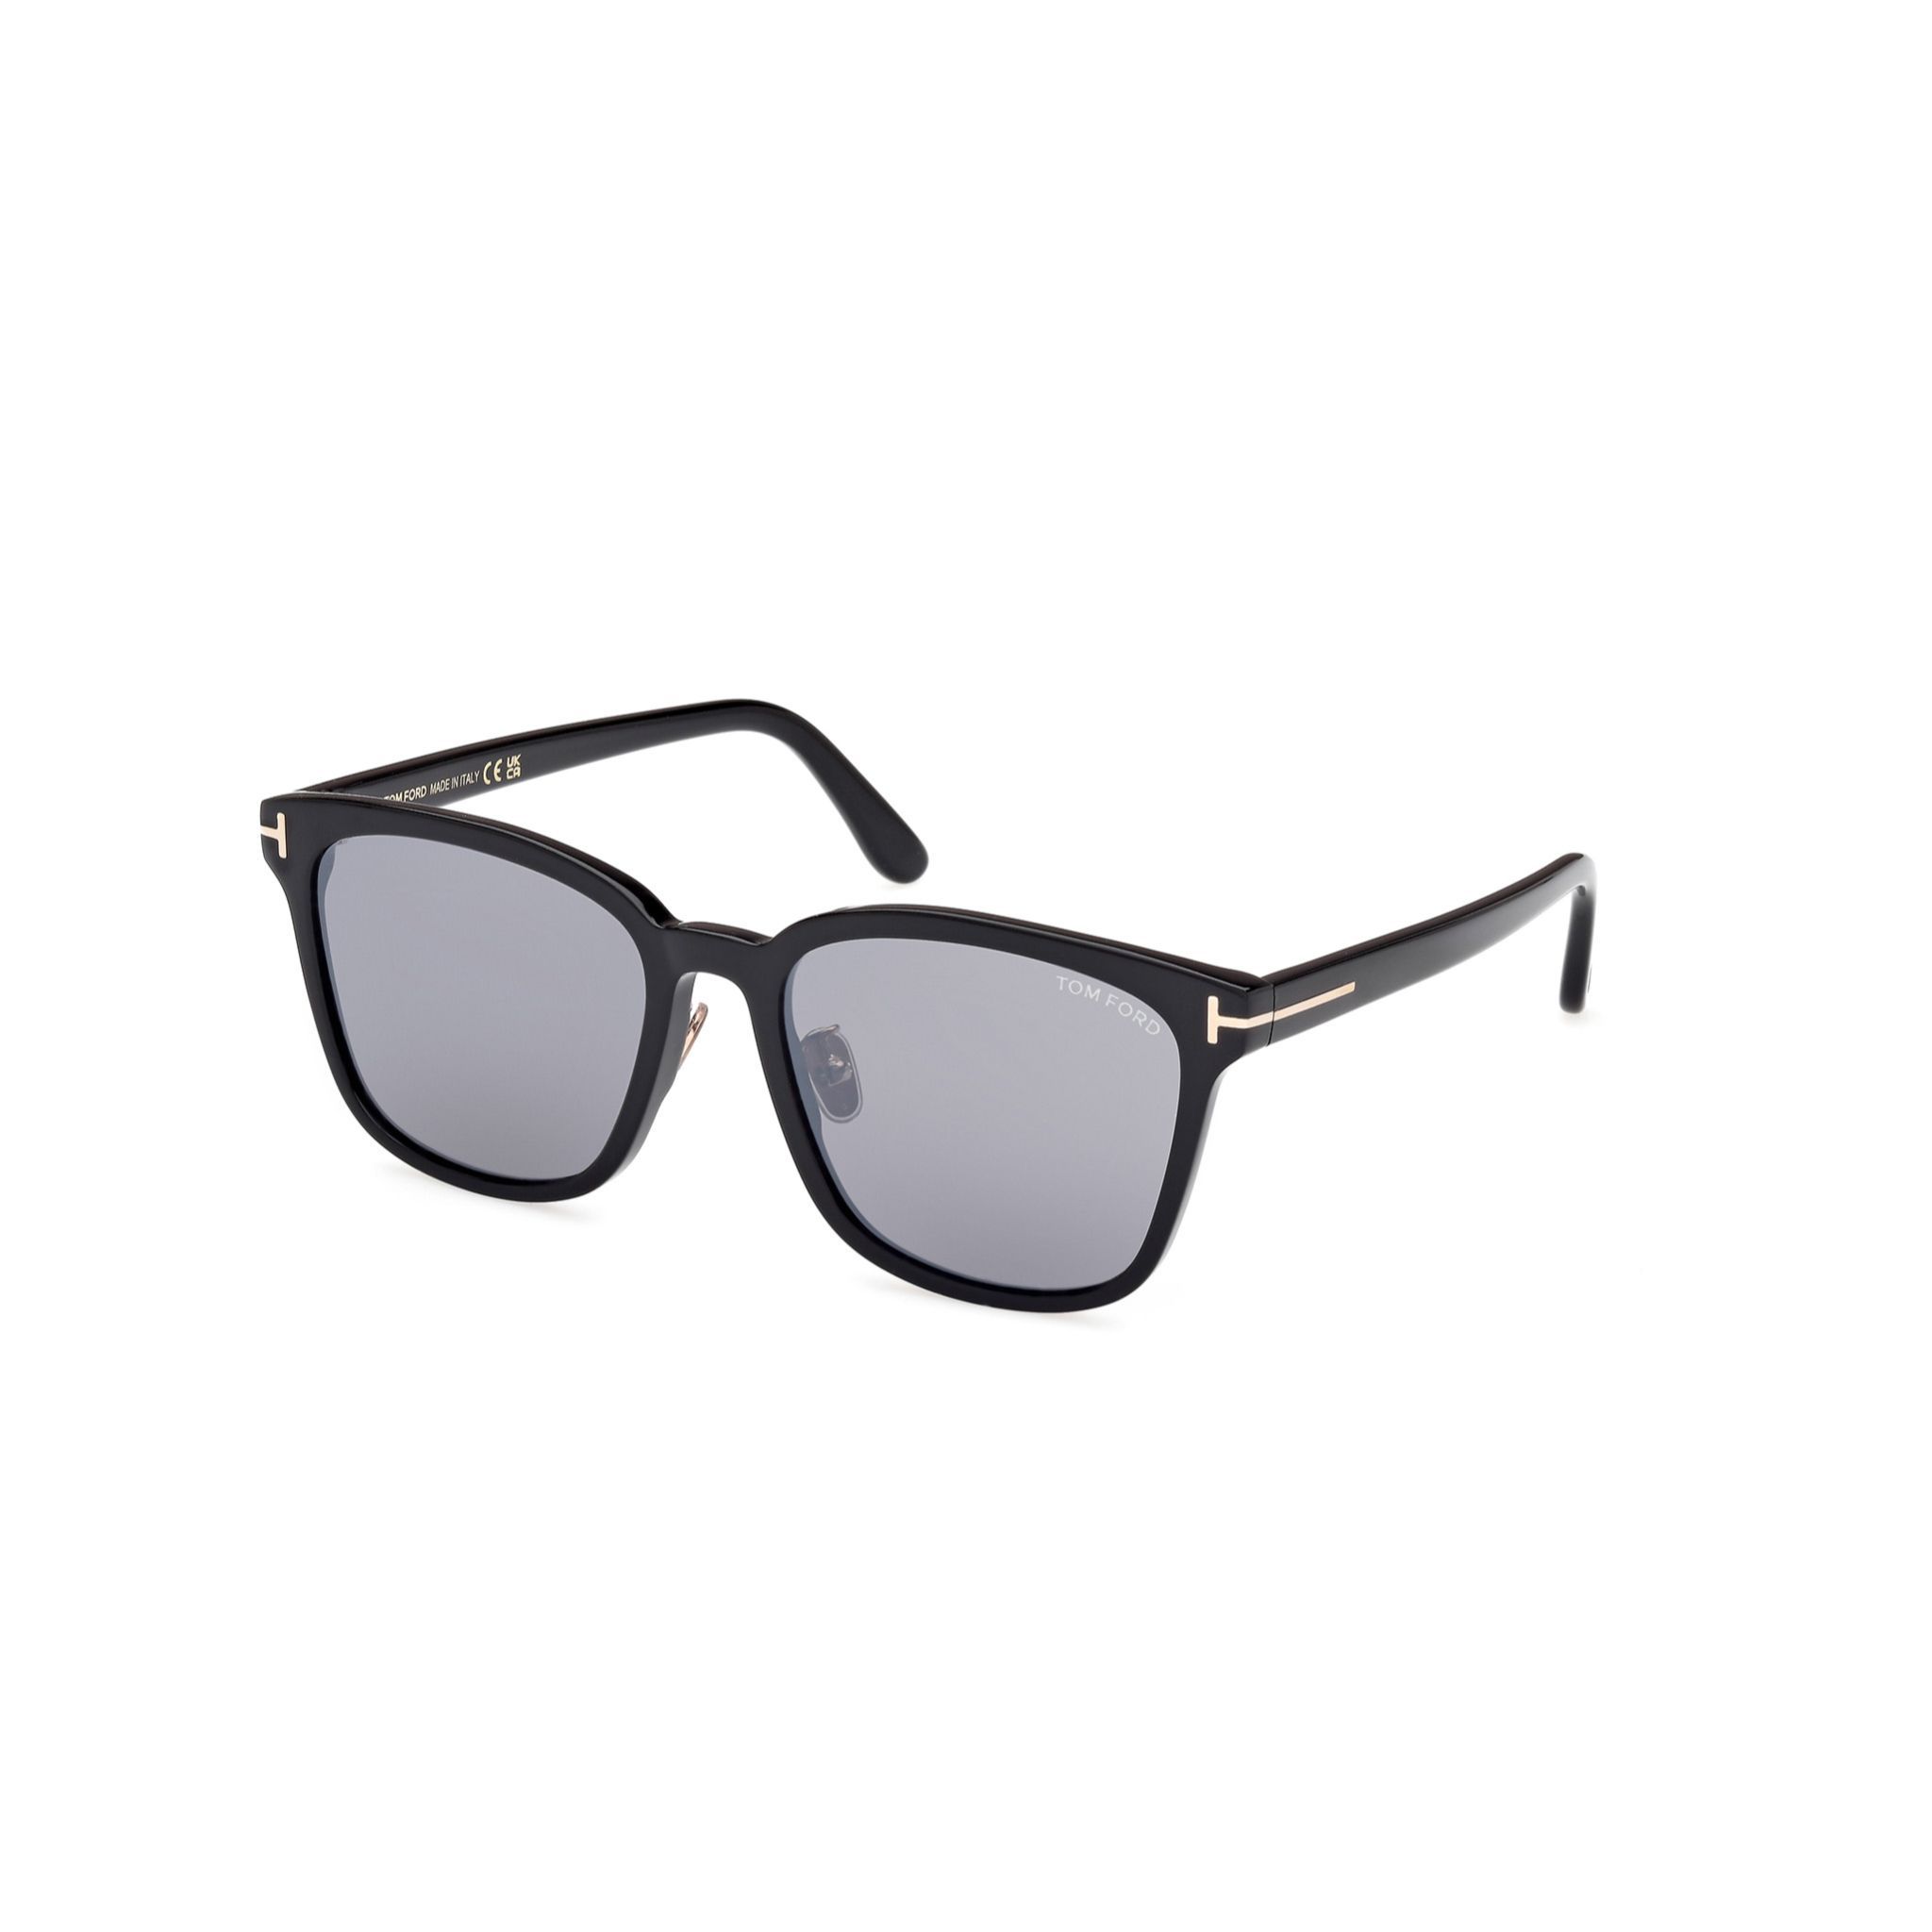 FT1130 Square Sunglasses 01C - size 56